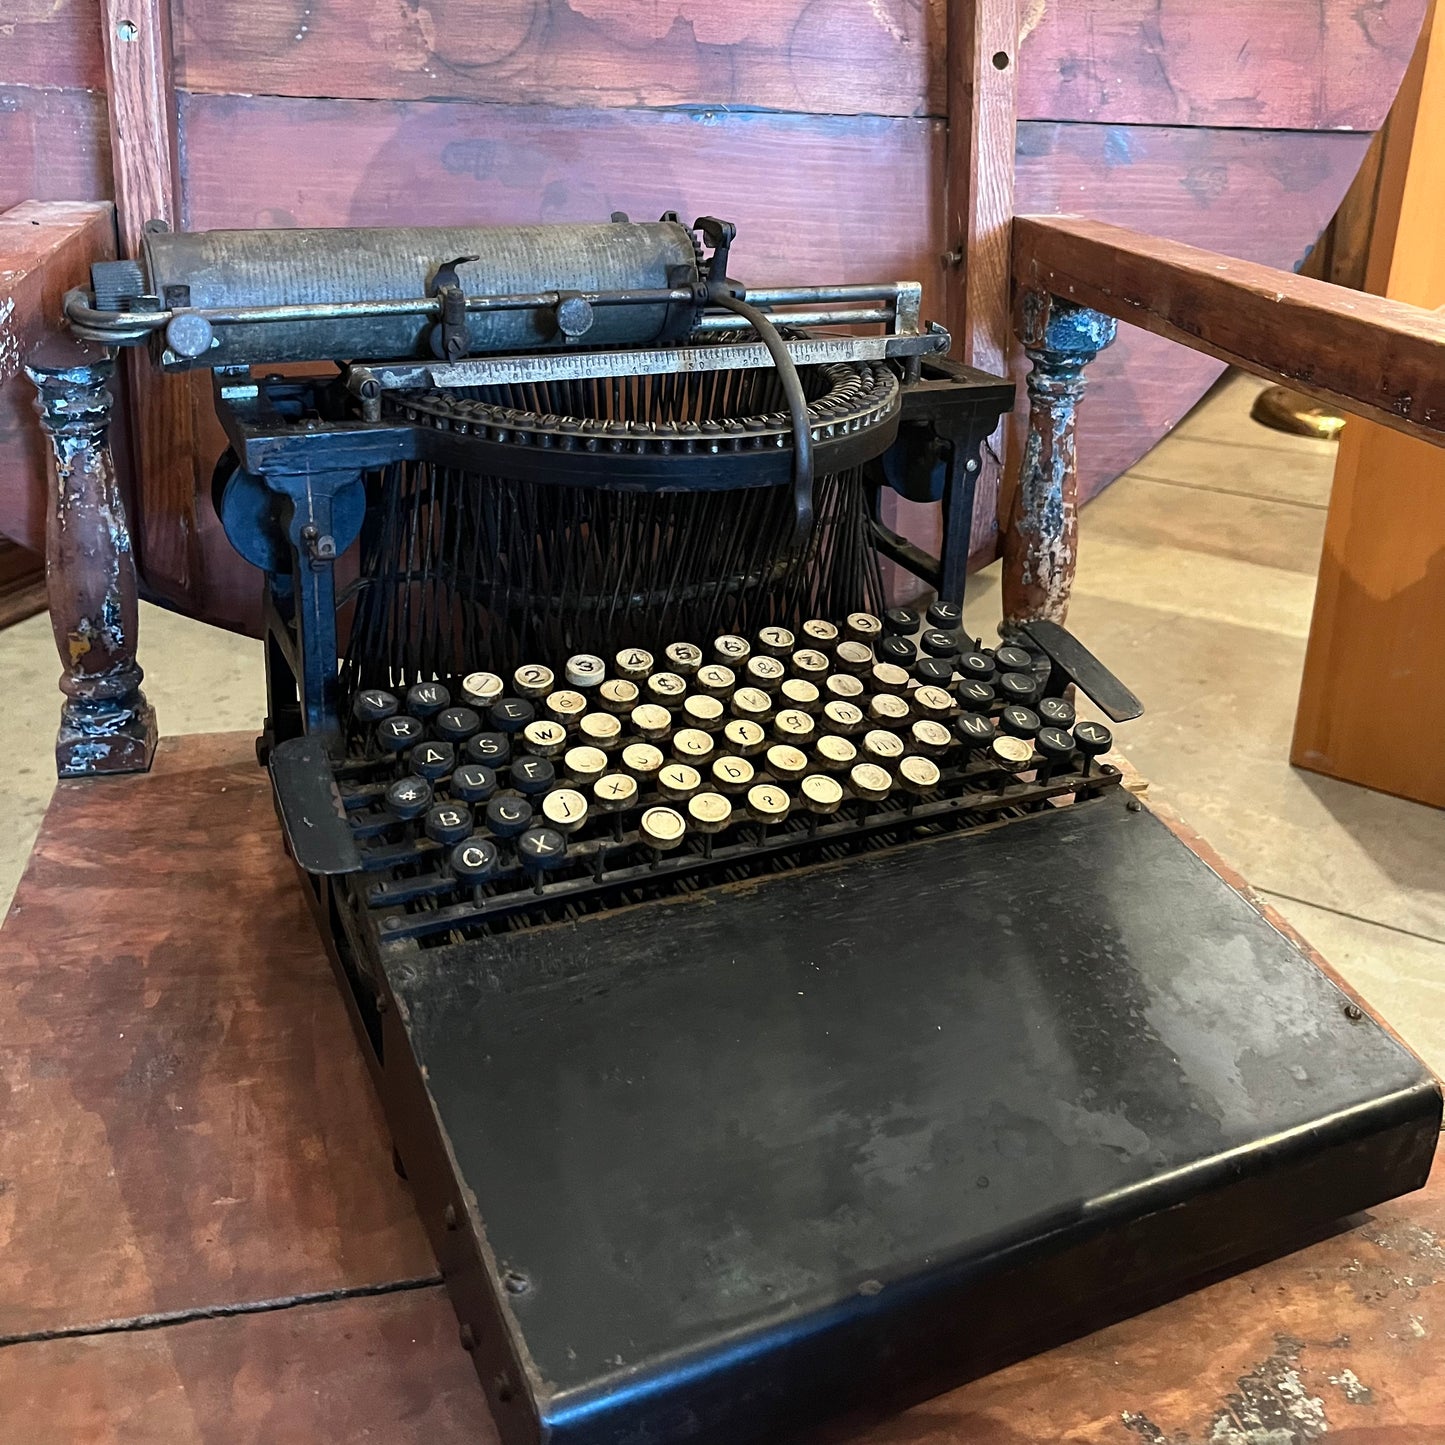 Caligraph typewriter - 1882 - American Writing Machine Co., New